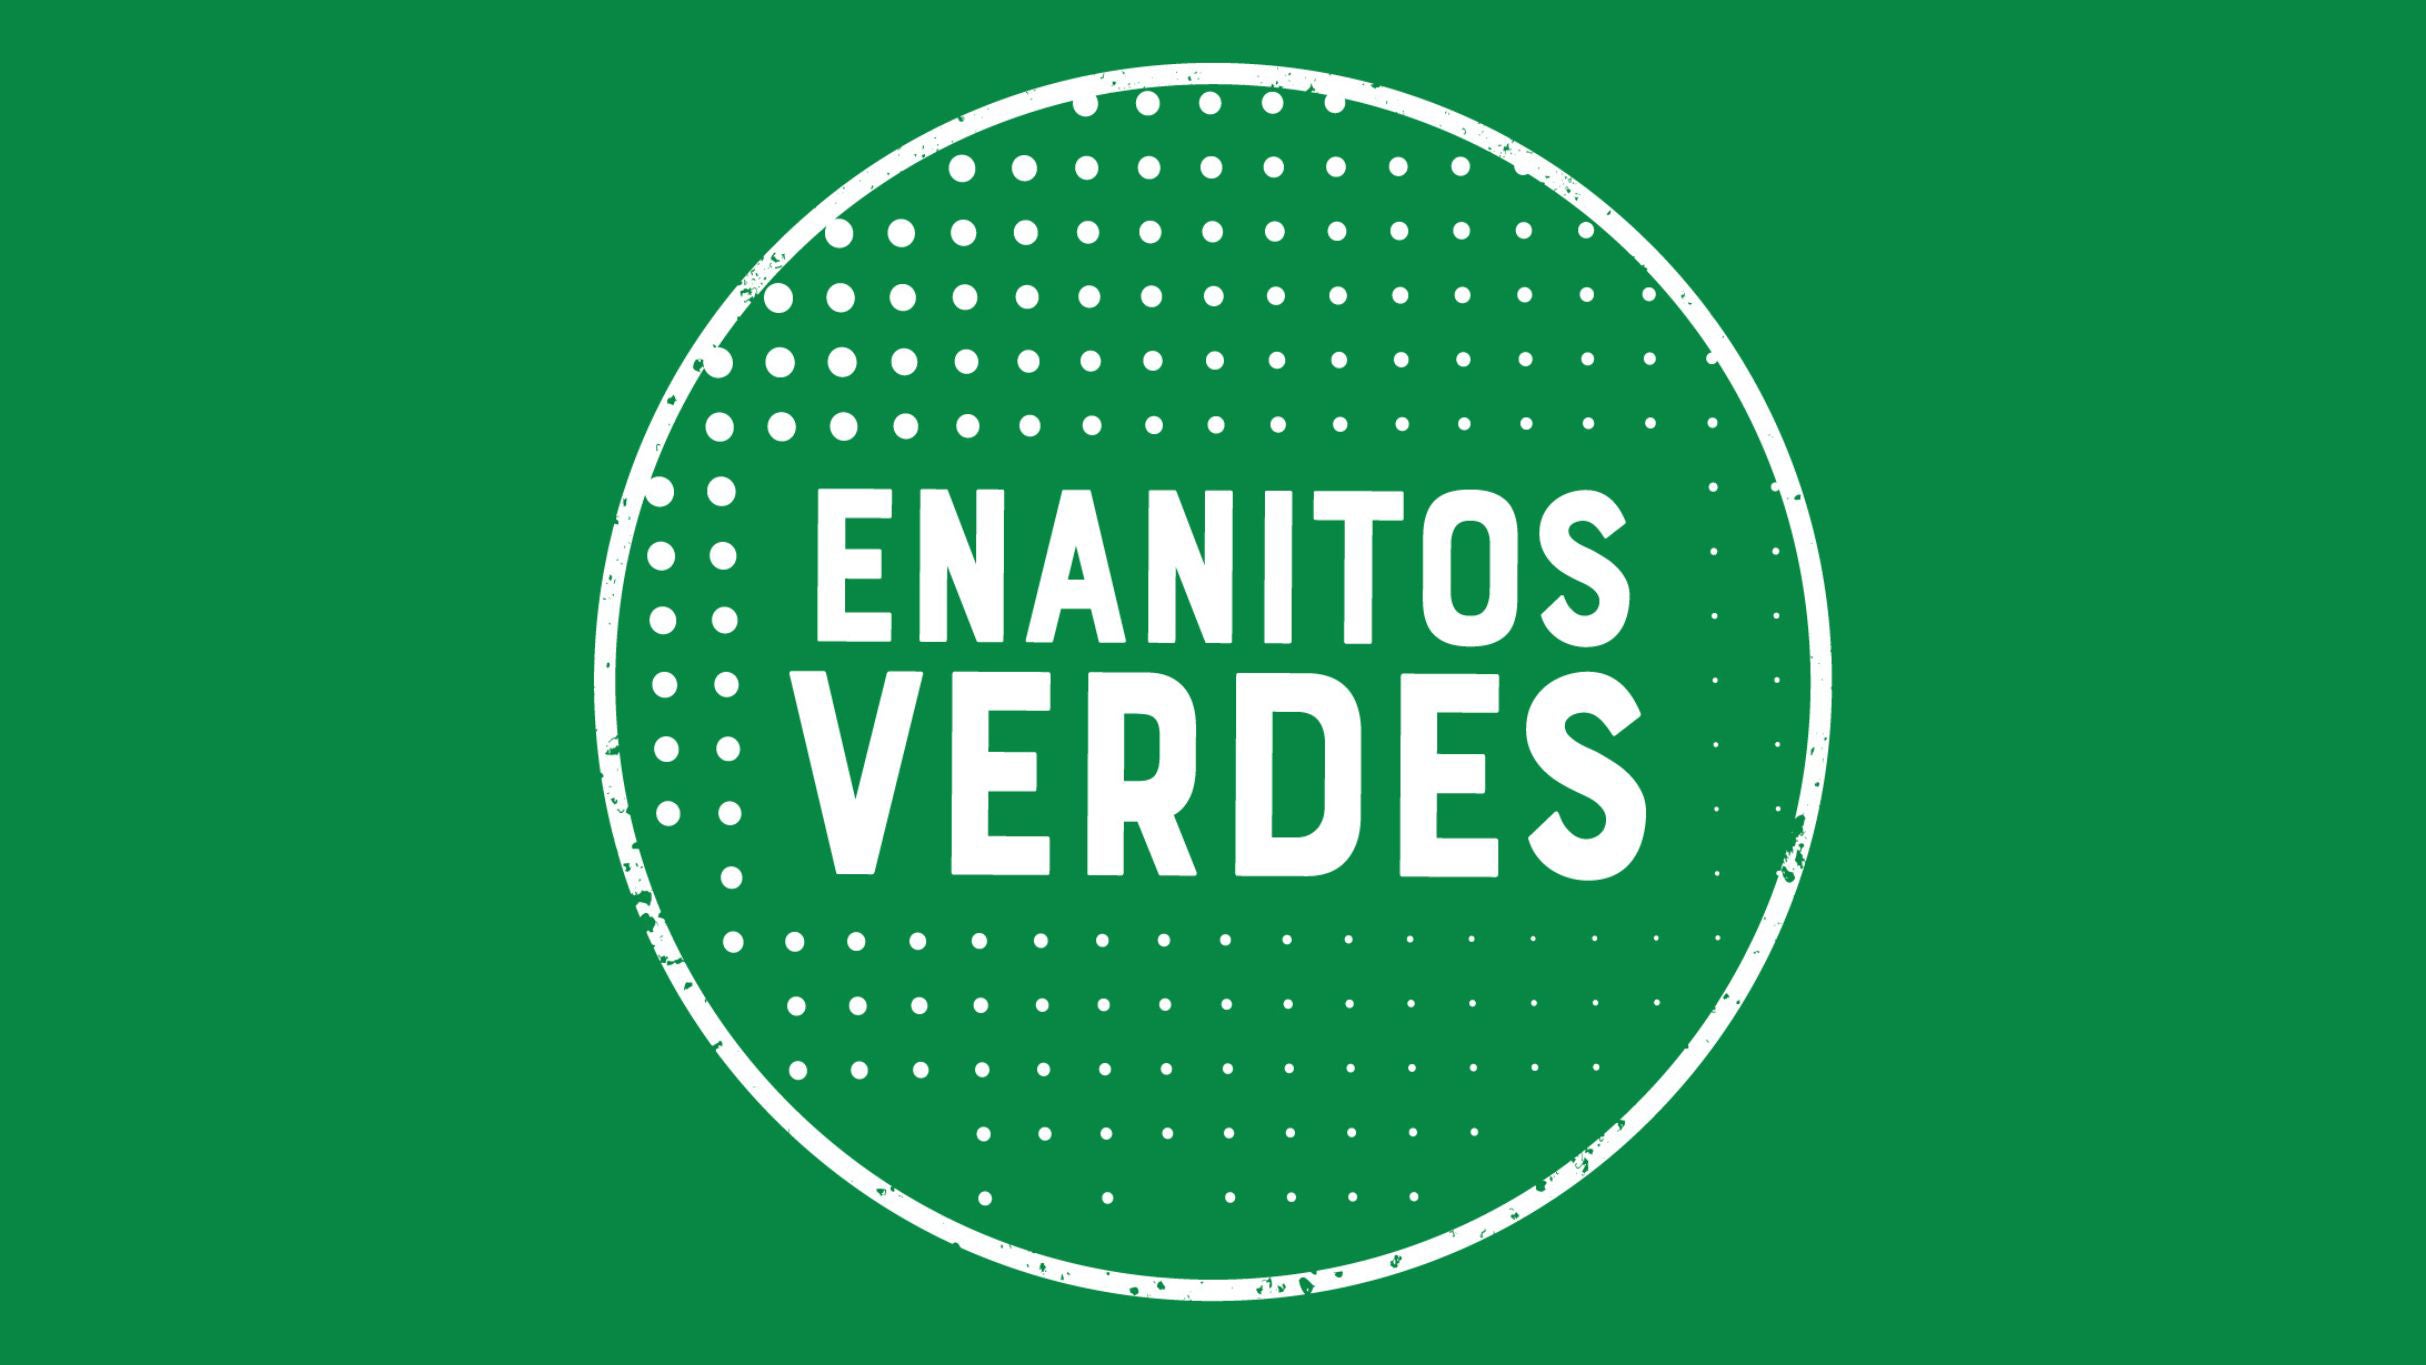 Enanitos Verdes in Las Vegas promo photo for Official Platinum presale offer code